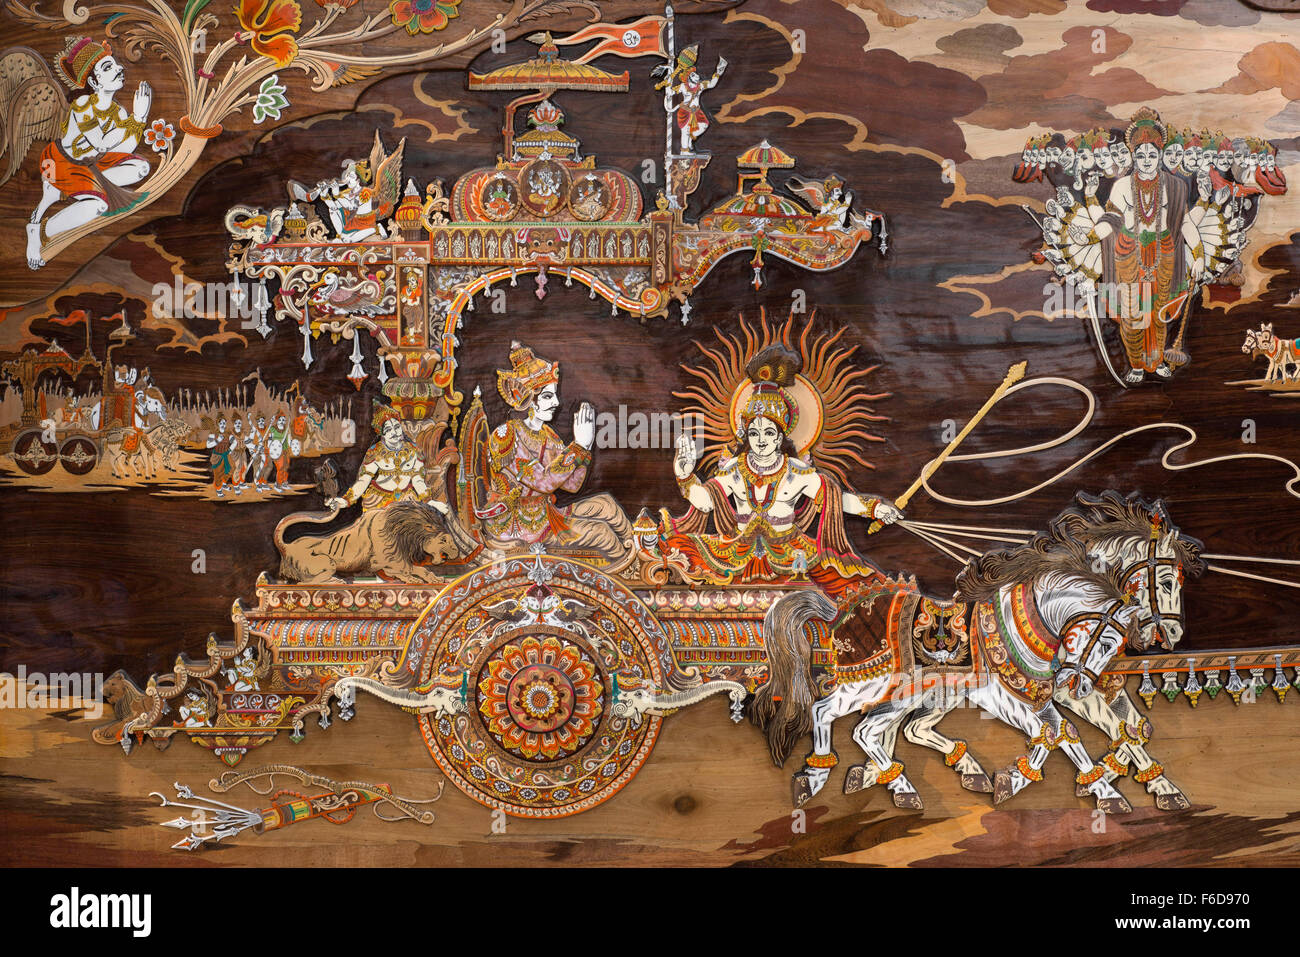 Lord Krishna on chariot preaching Arjuna in Mahabharata painting, India, Asia Stock Photo